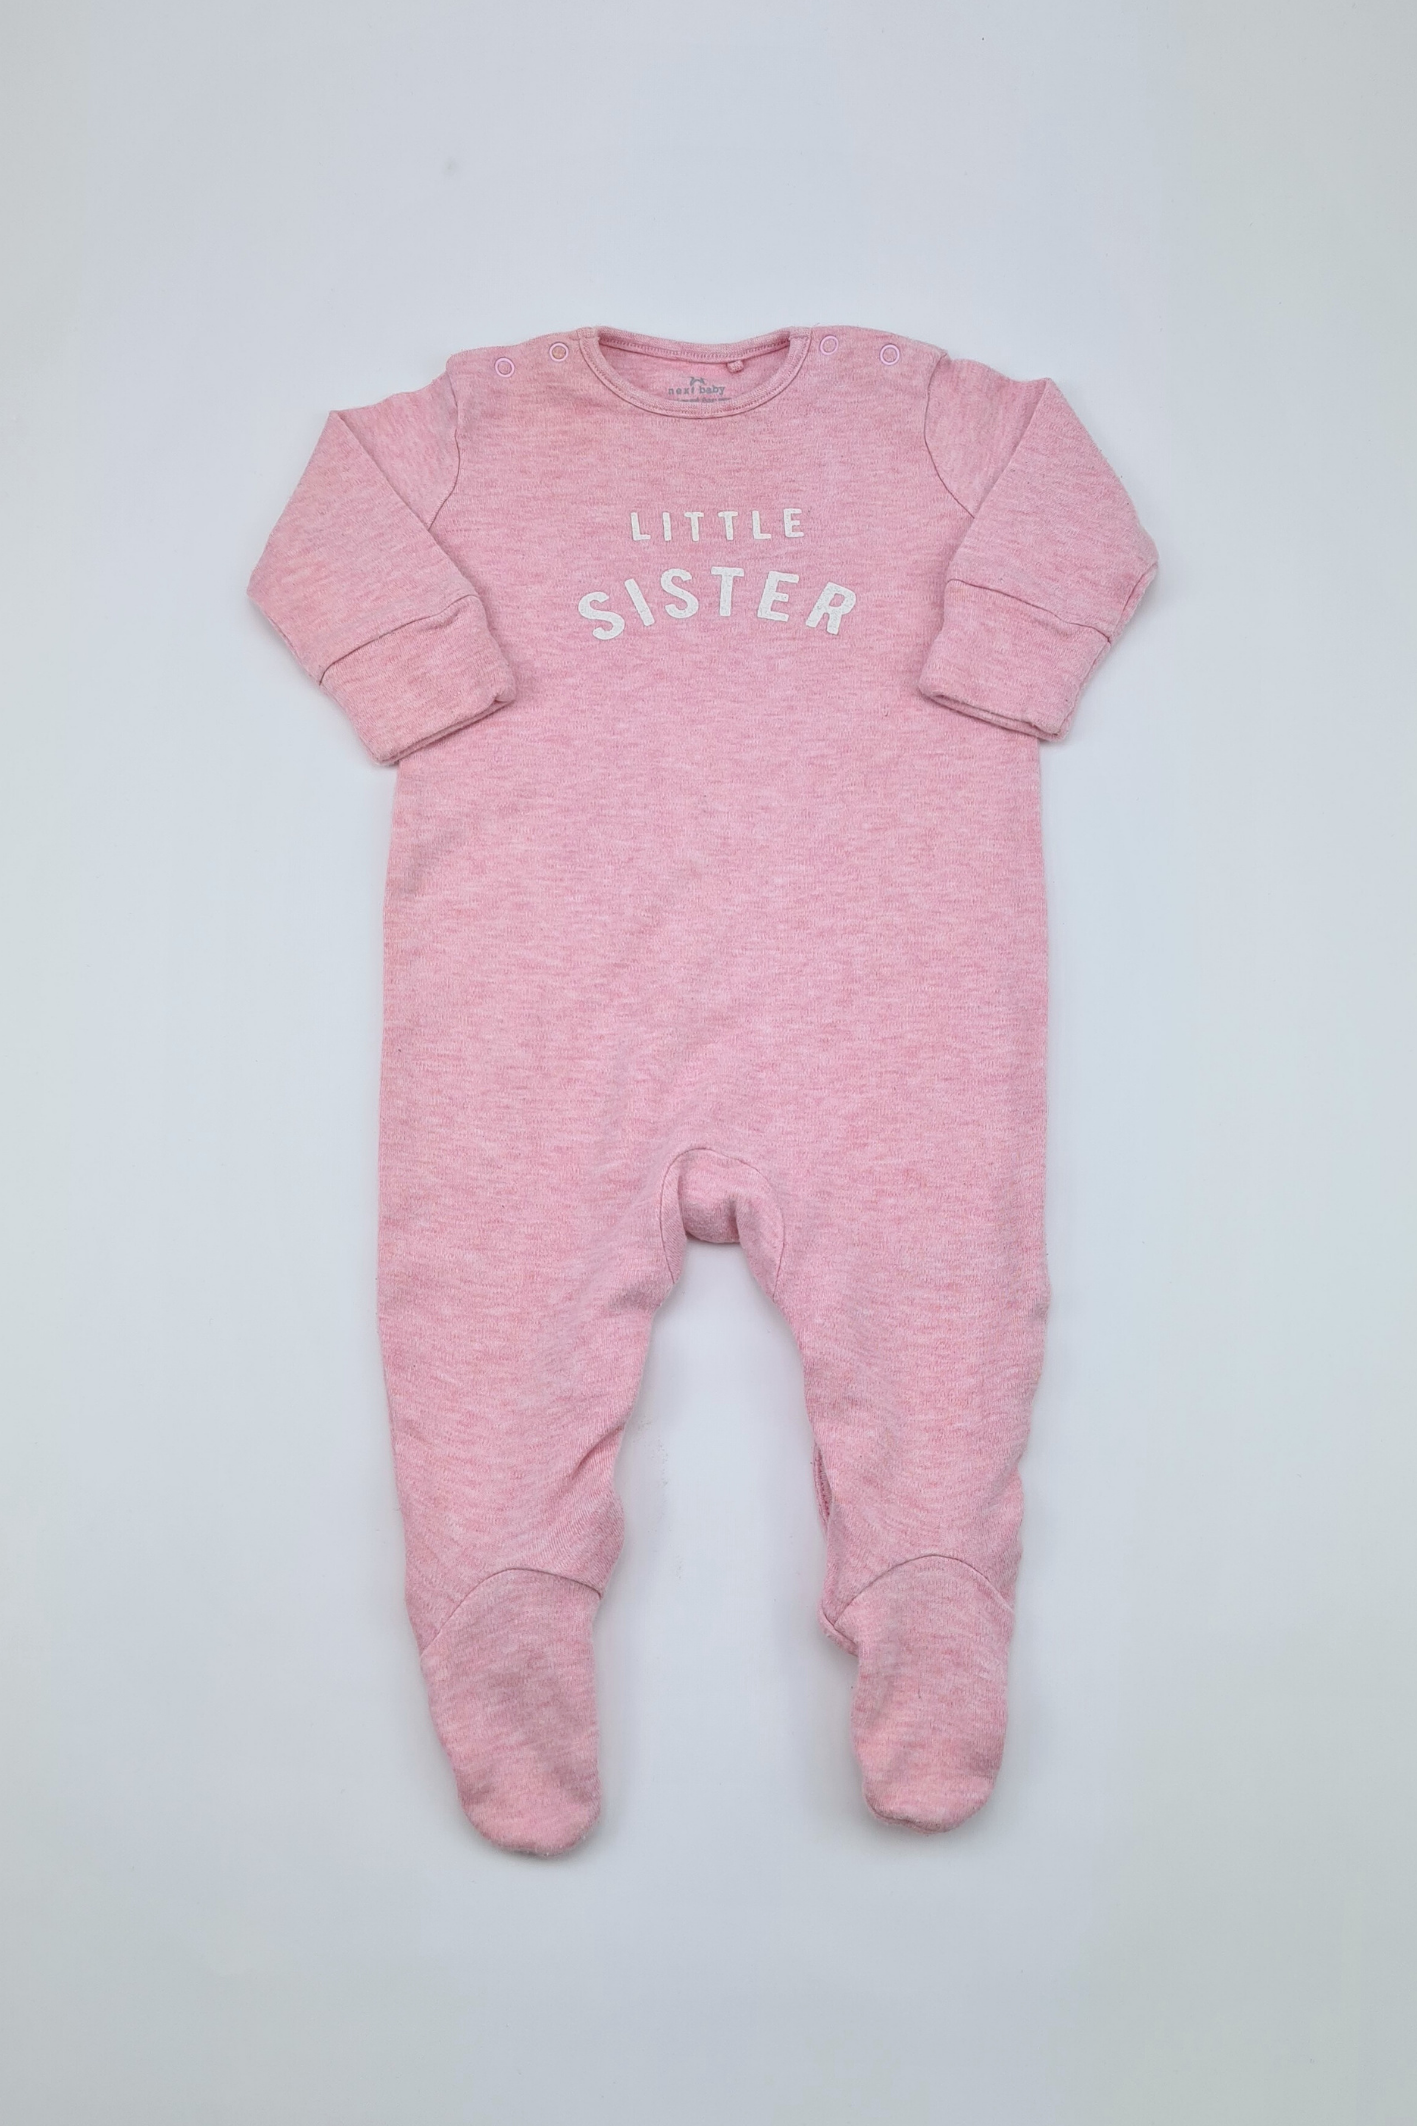 0-3m - Little Sister Pink Sleepsuit (Next)